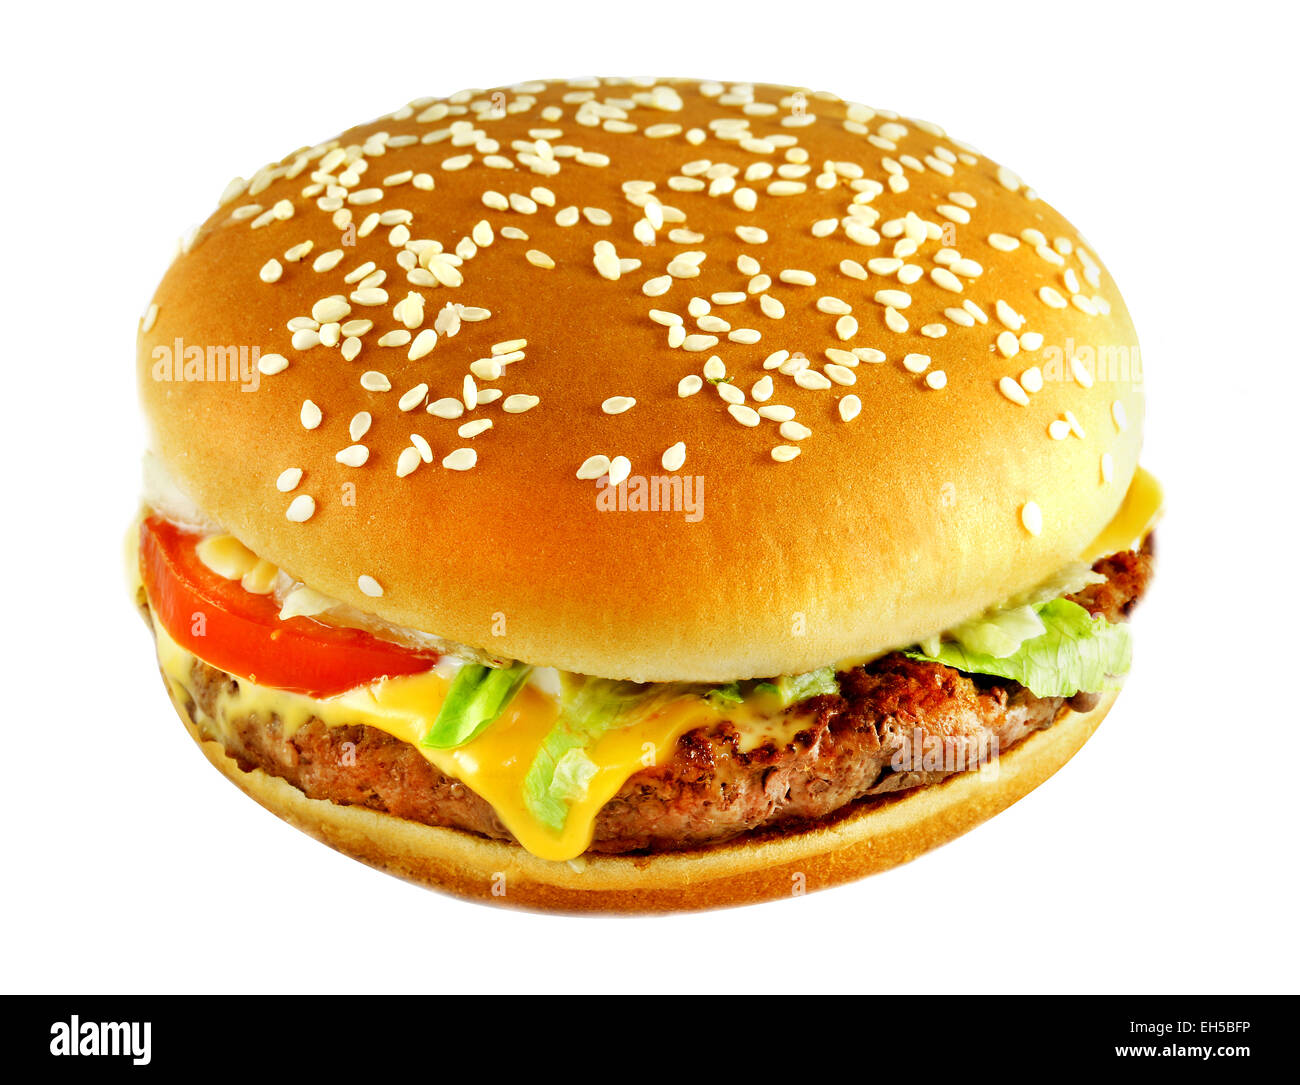 Big fresh delicious burger on a white background Stock Photo